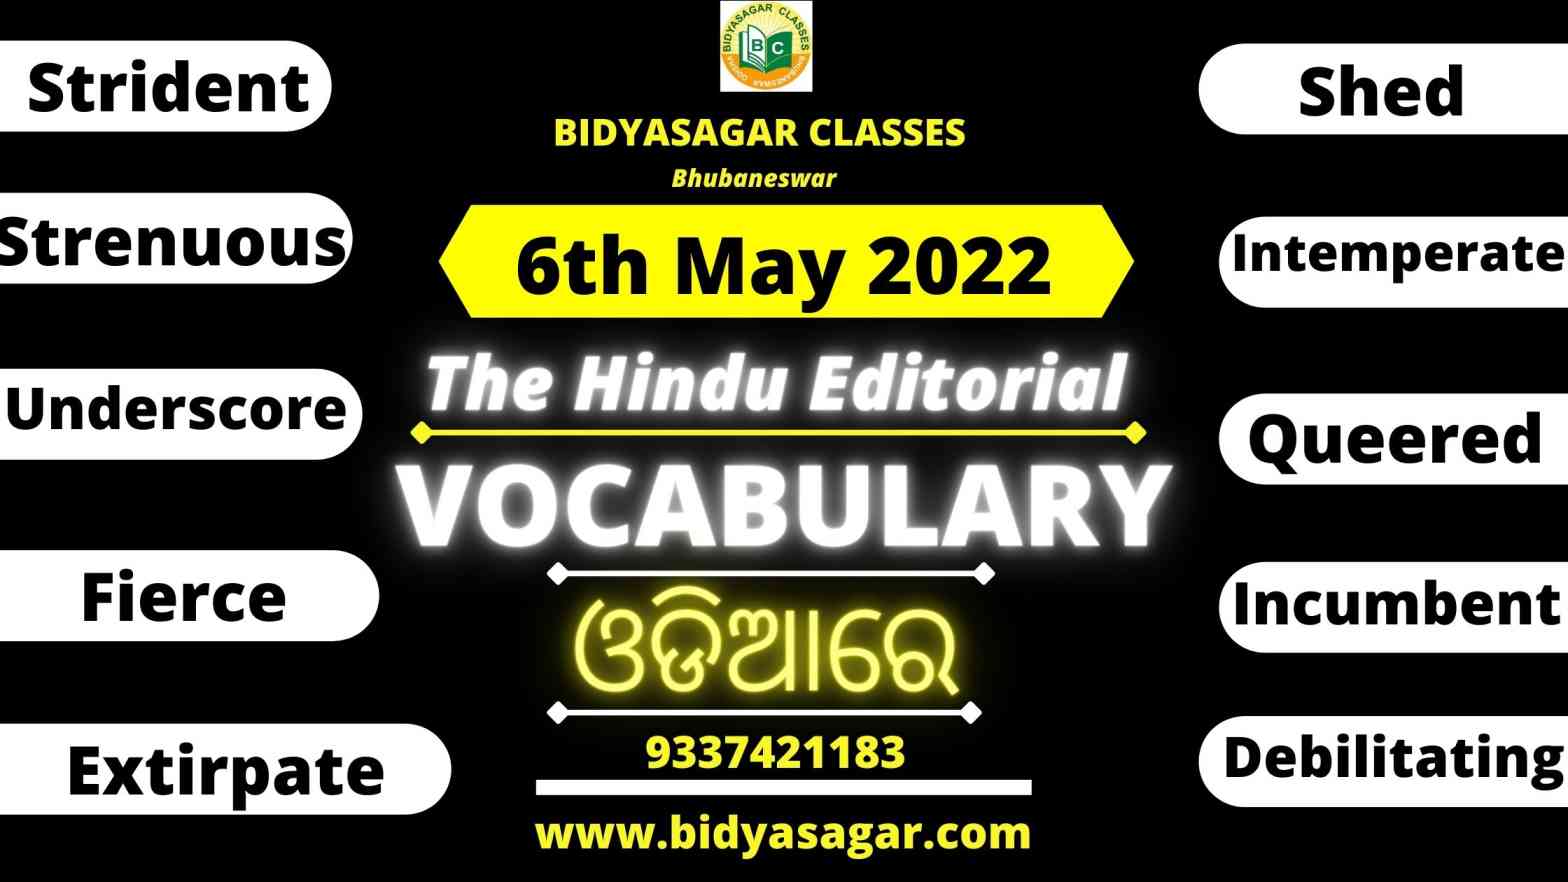 The Hindu Editorial Vocabulary of 6th May 2022